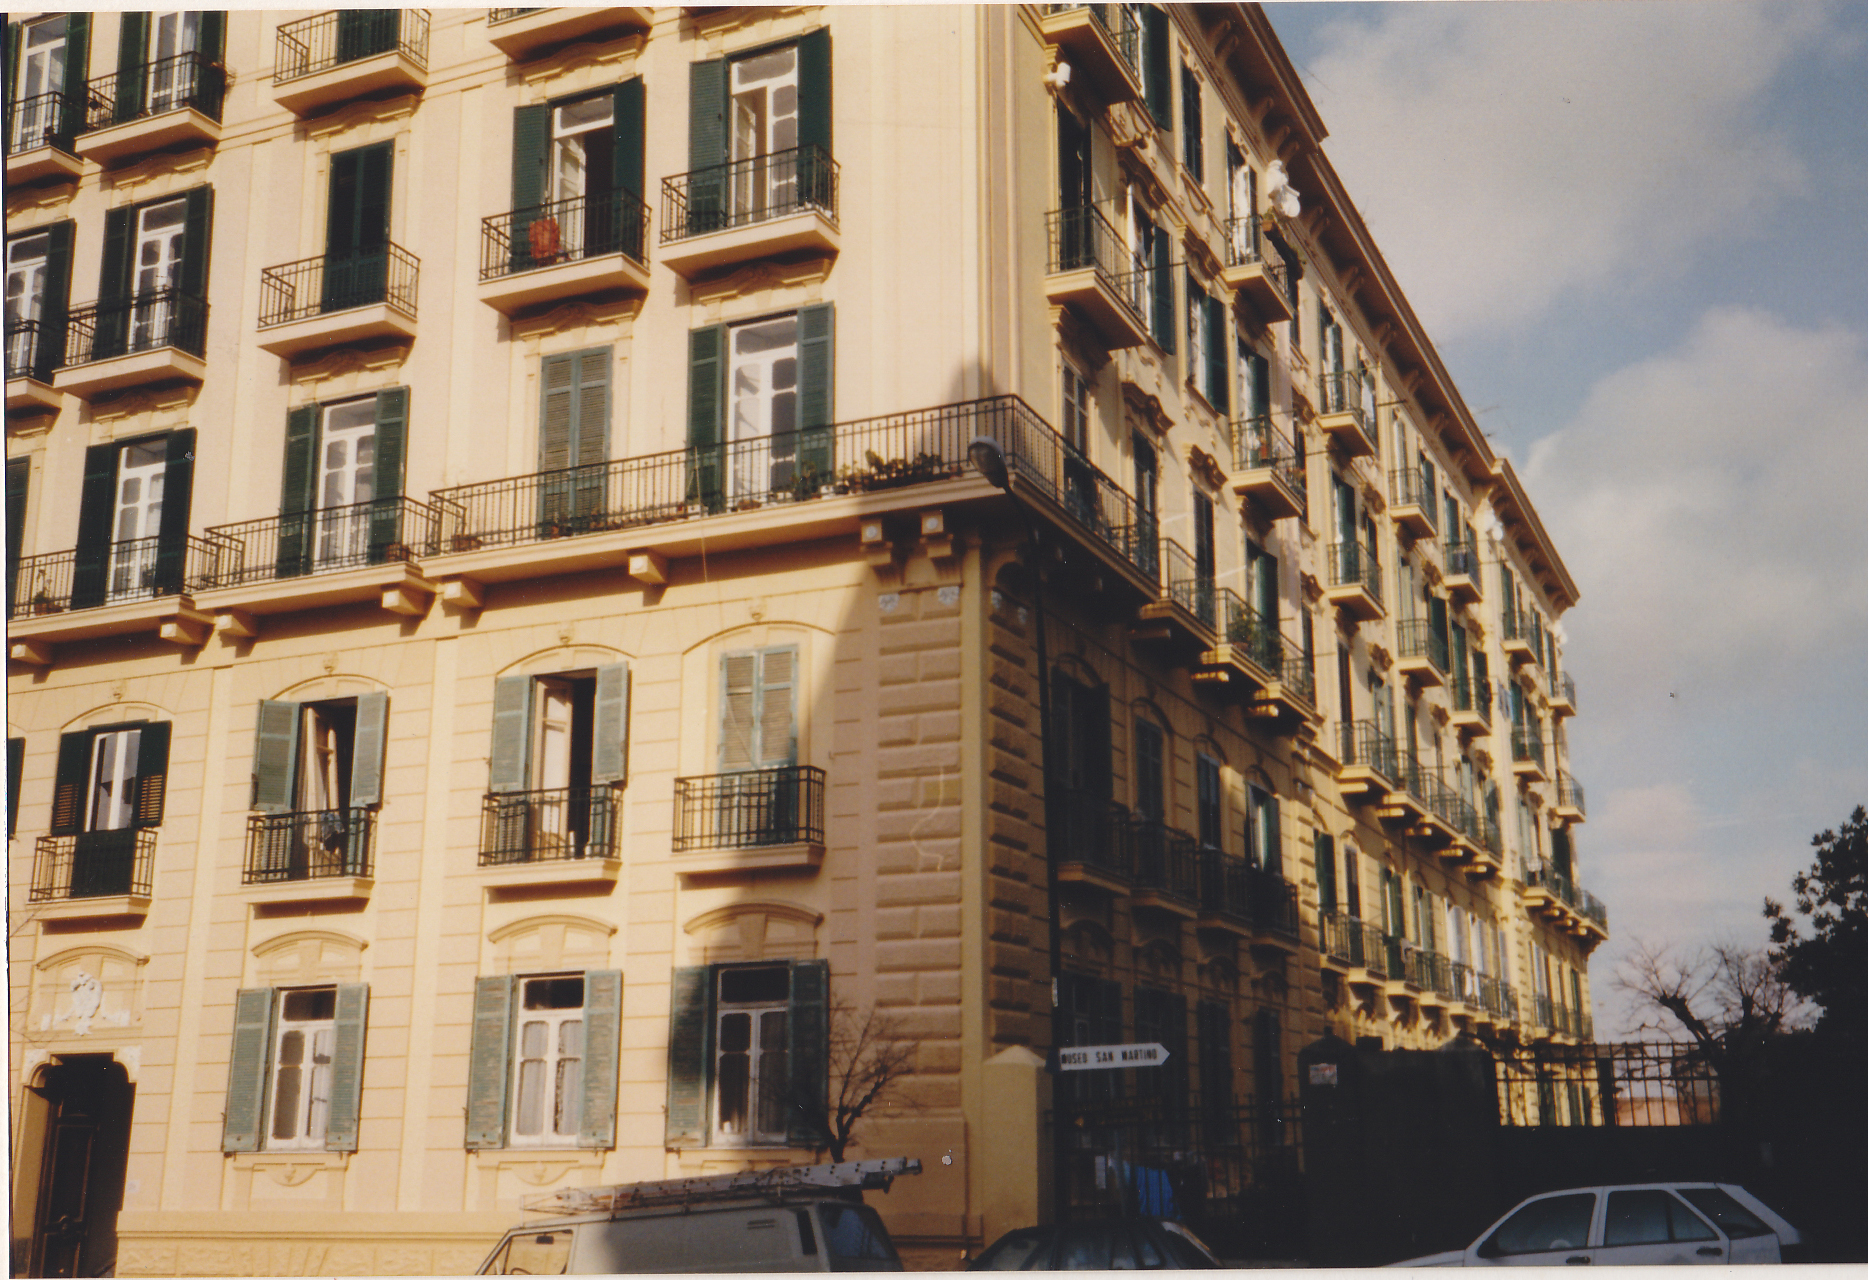 ignota - Via Bonito, 29 (palazzo, residenziale) - Napoli (NA)  (XX)